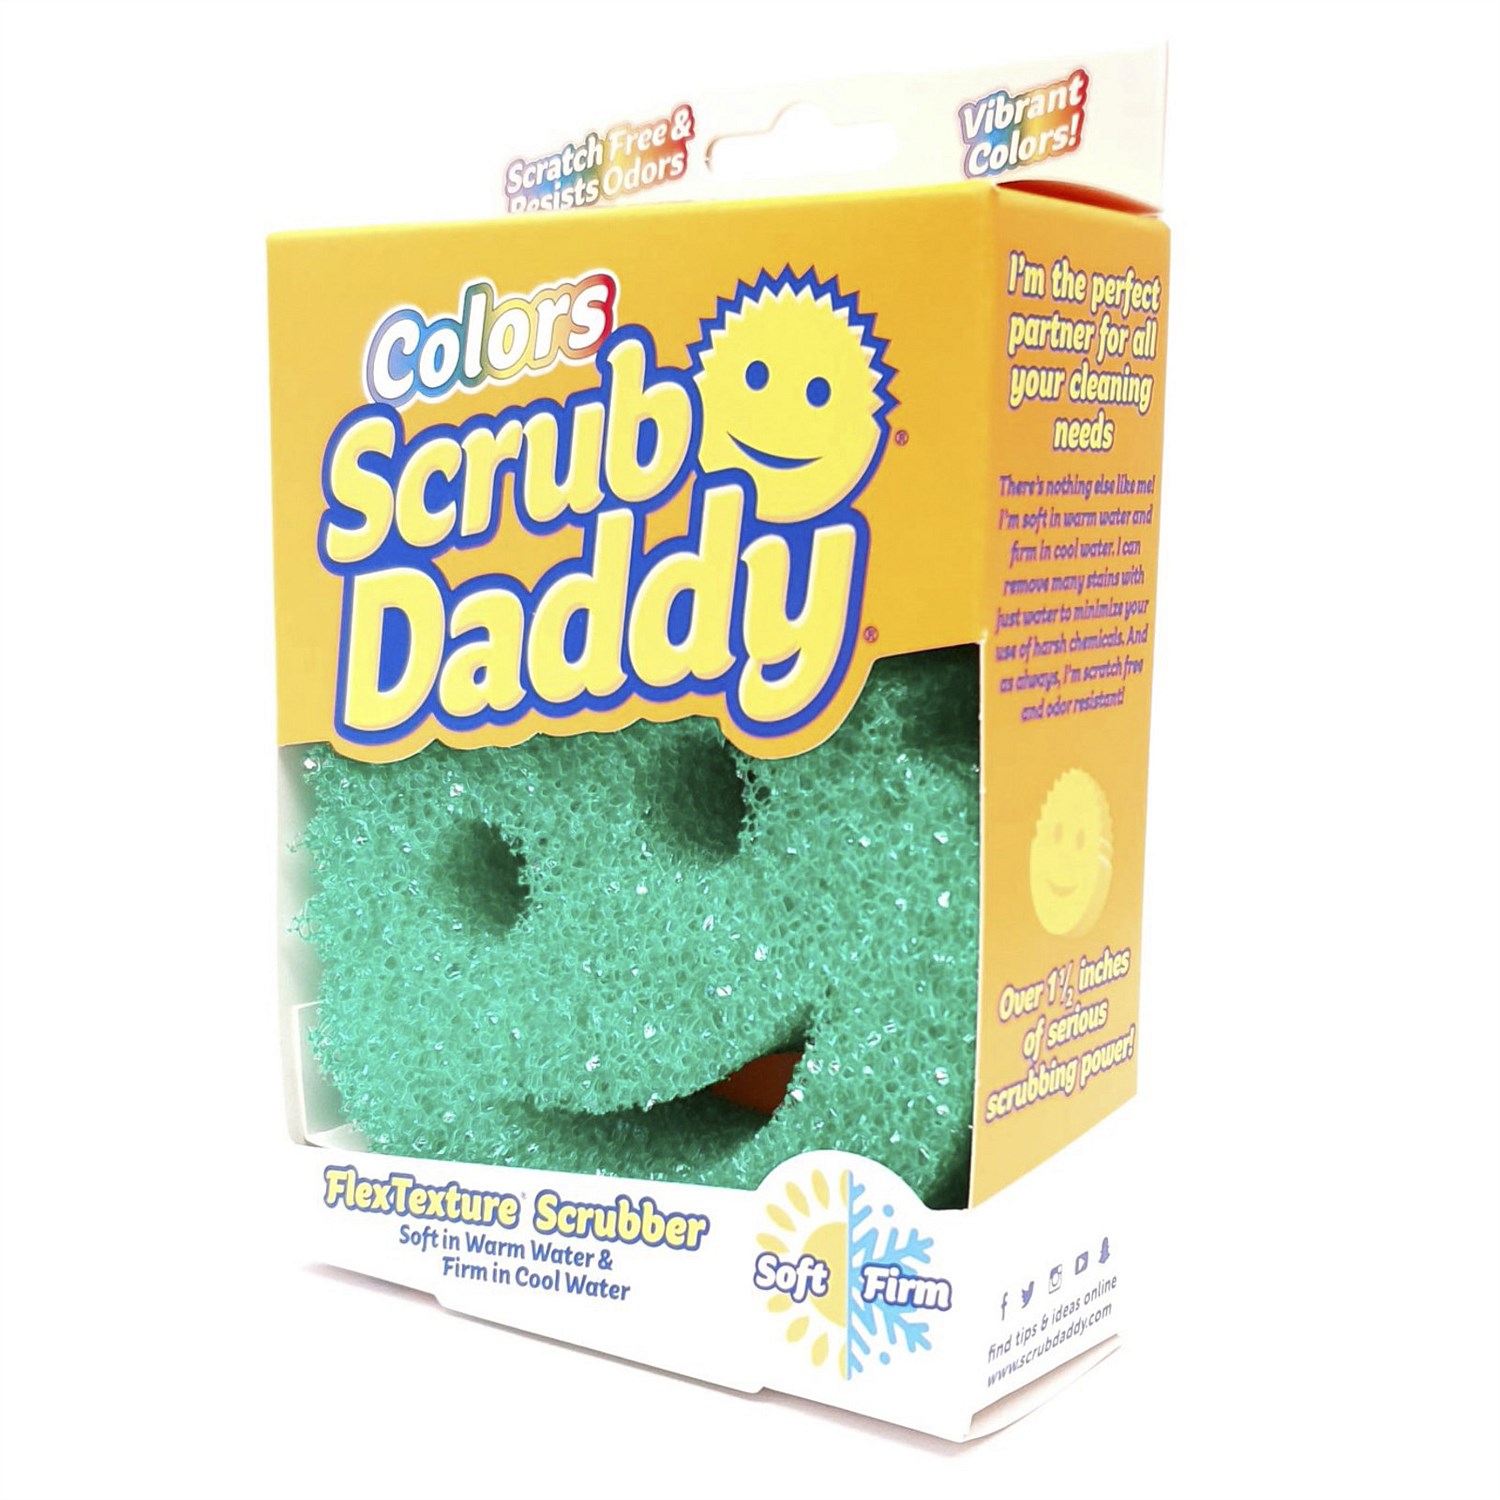 Scrub Daddy Style Collection Scrubber, FlexTexture